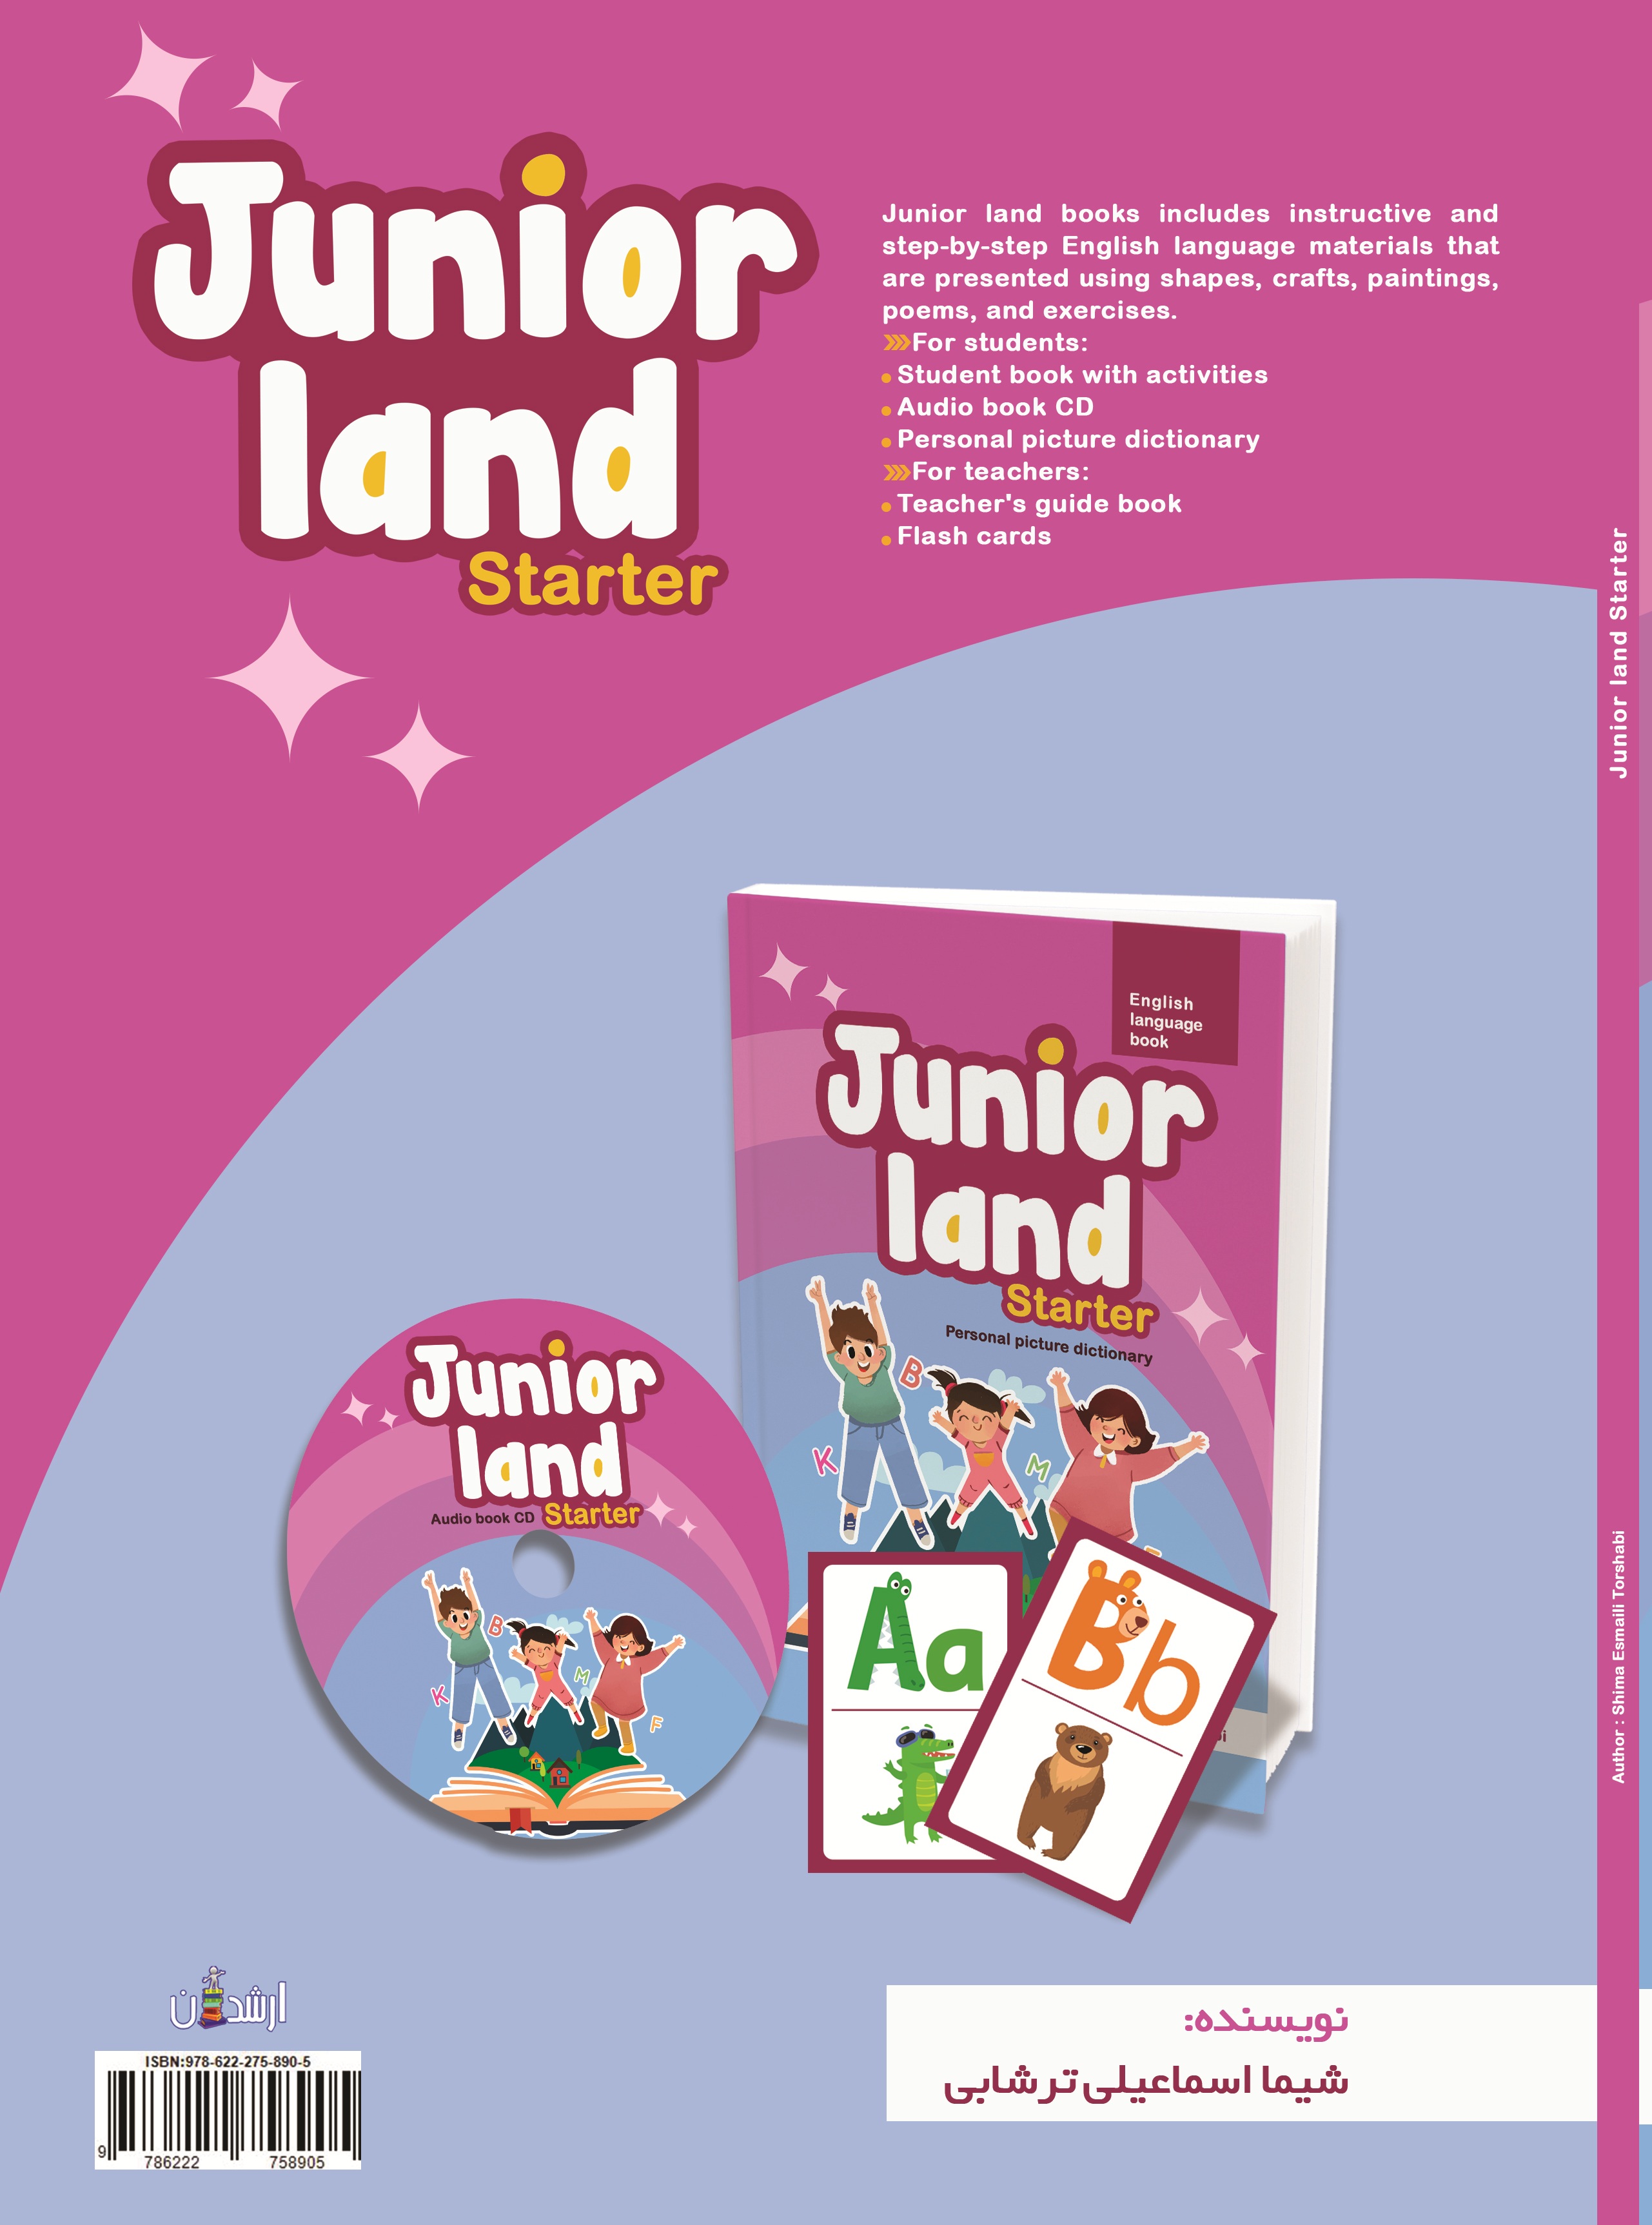 Junior land starter